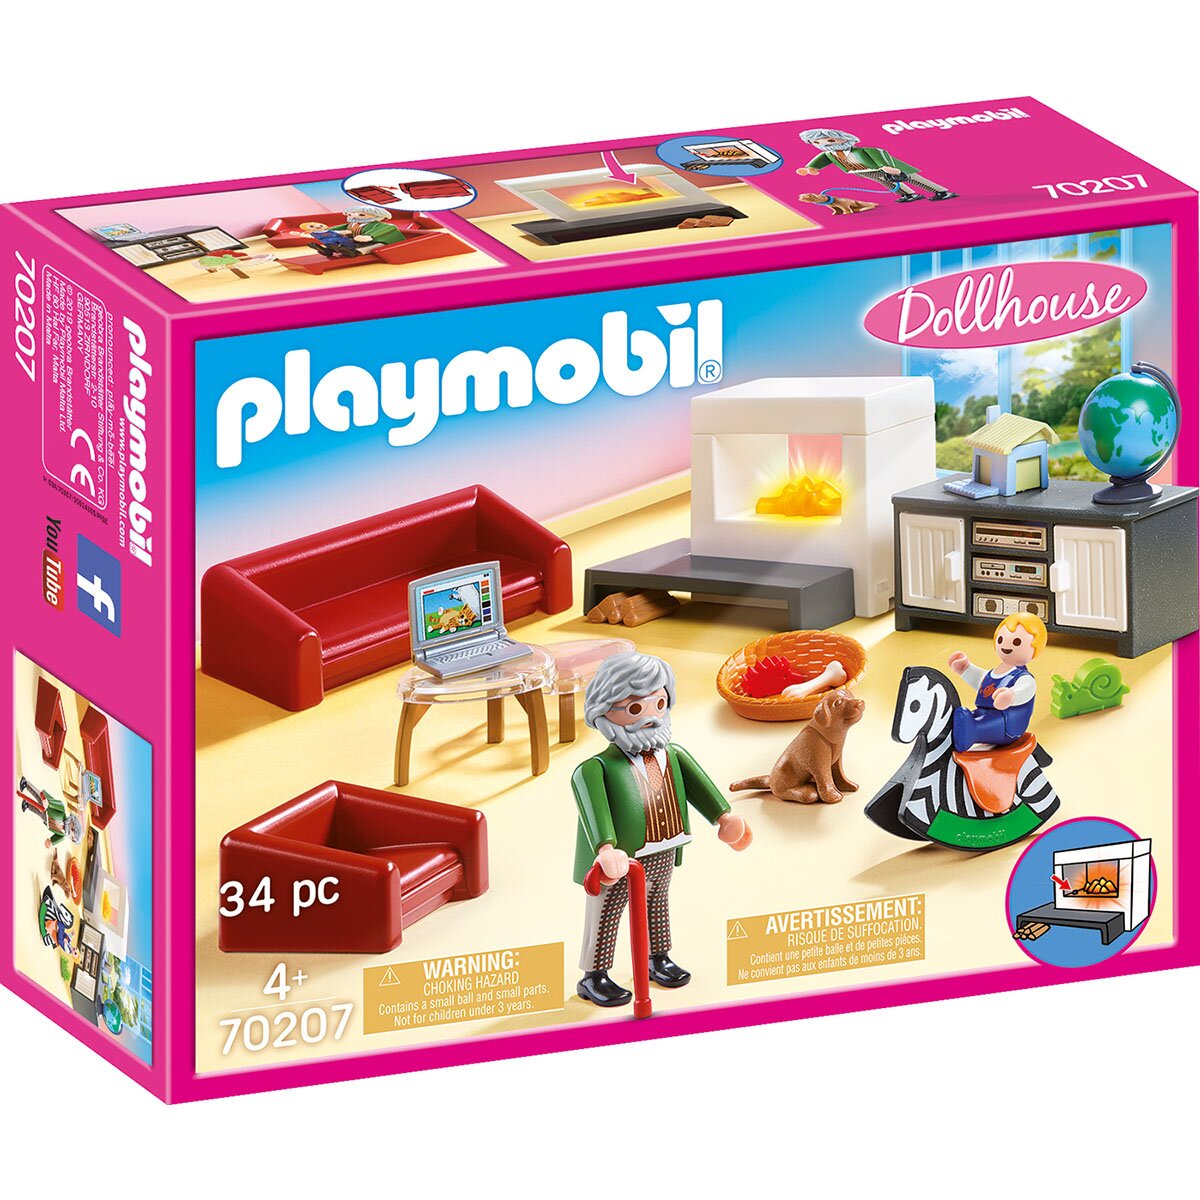 Playmobil Herr Opa mit Koffer zum Puppenhaus Rosa Serie 